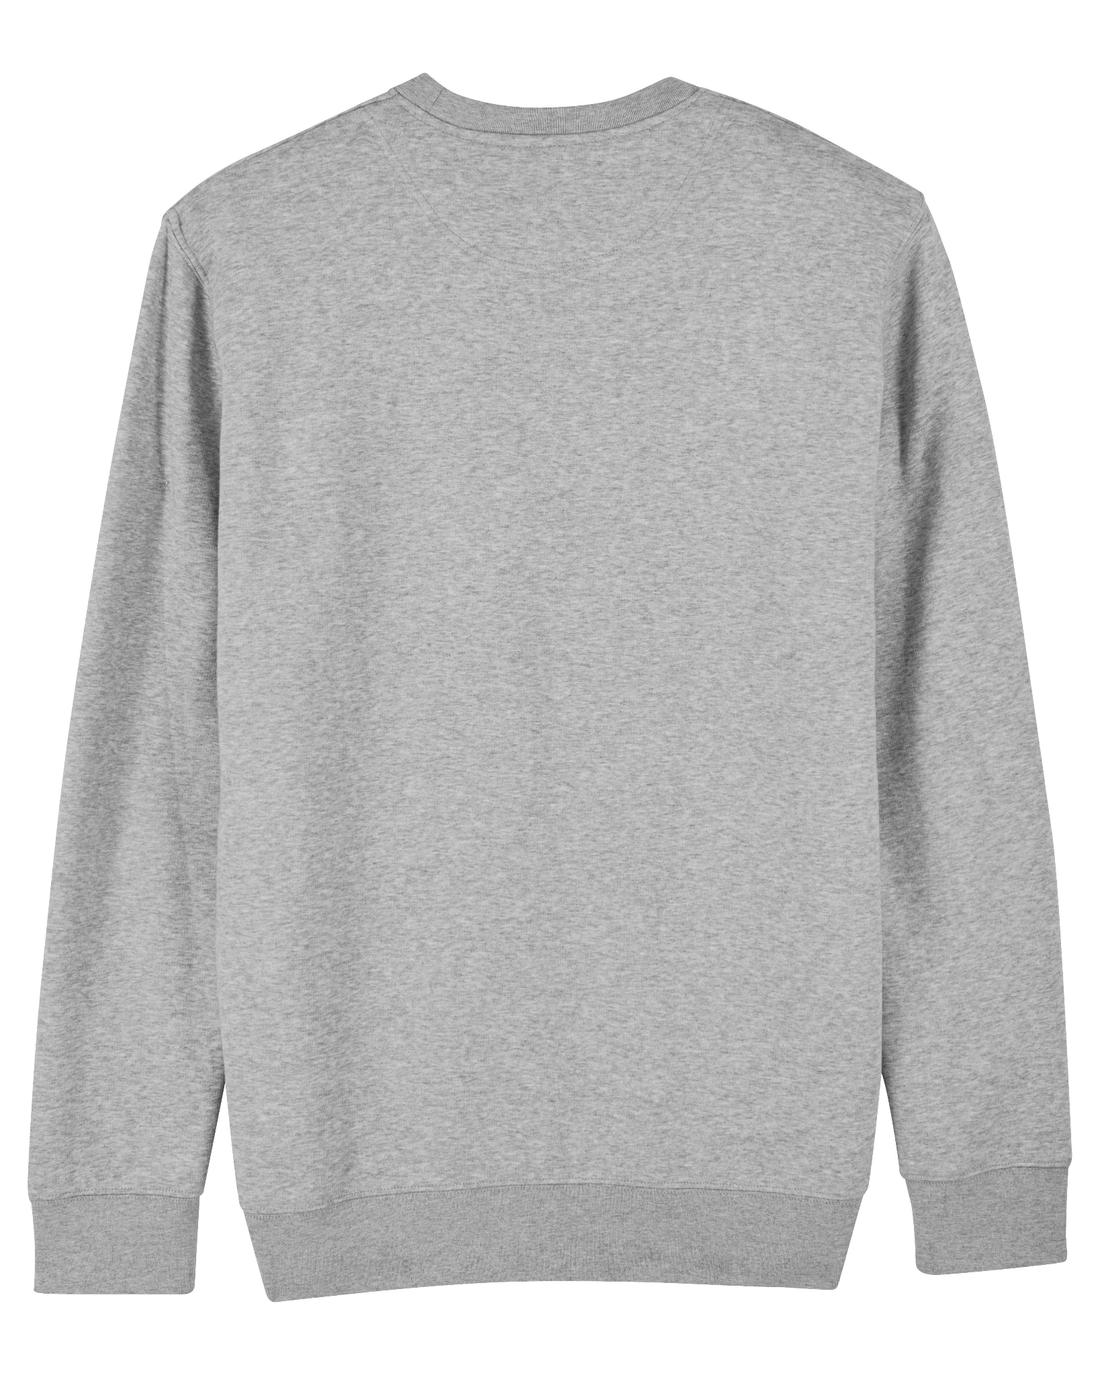 Grey Skater Sweatshirt, Skate Ramp Back Print